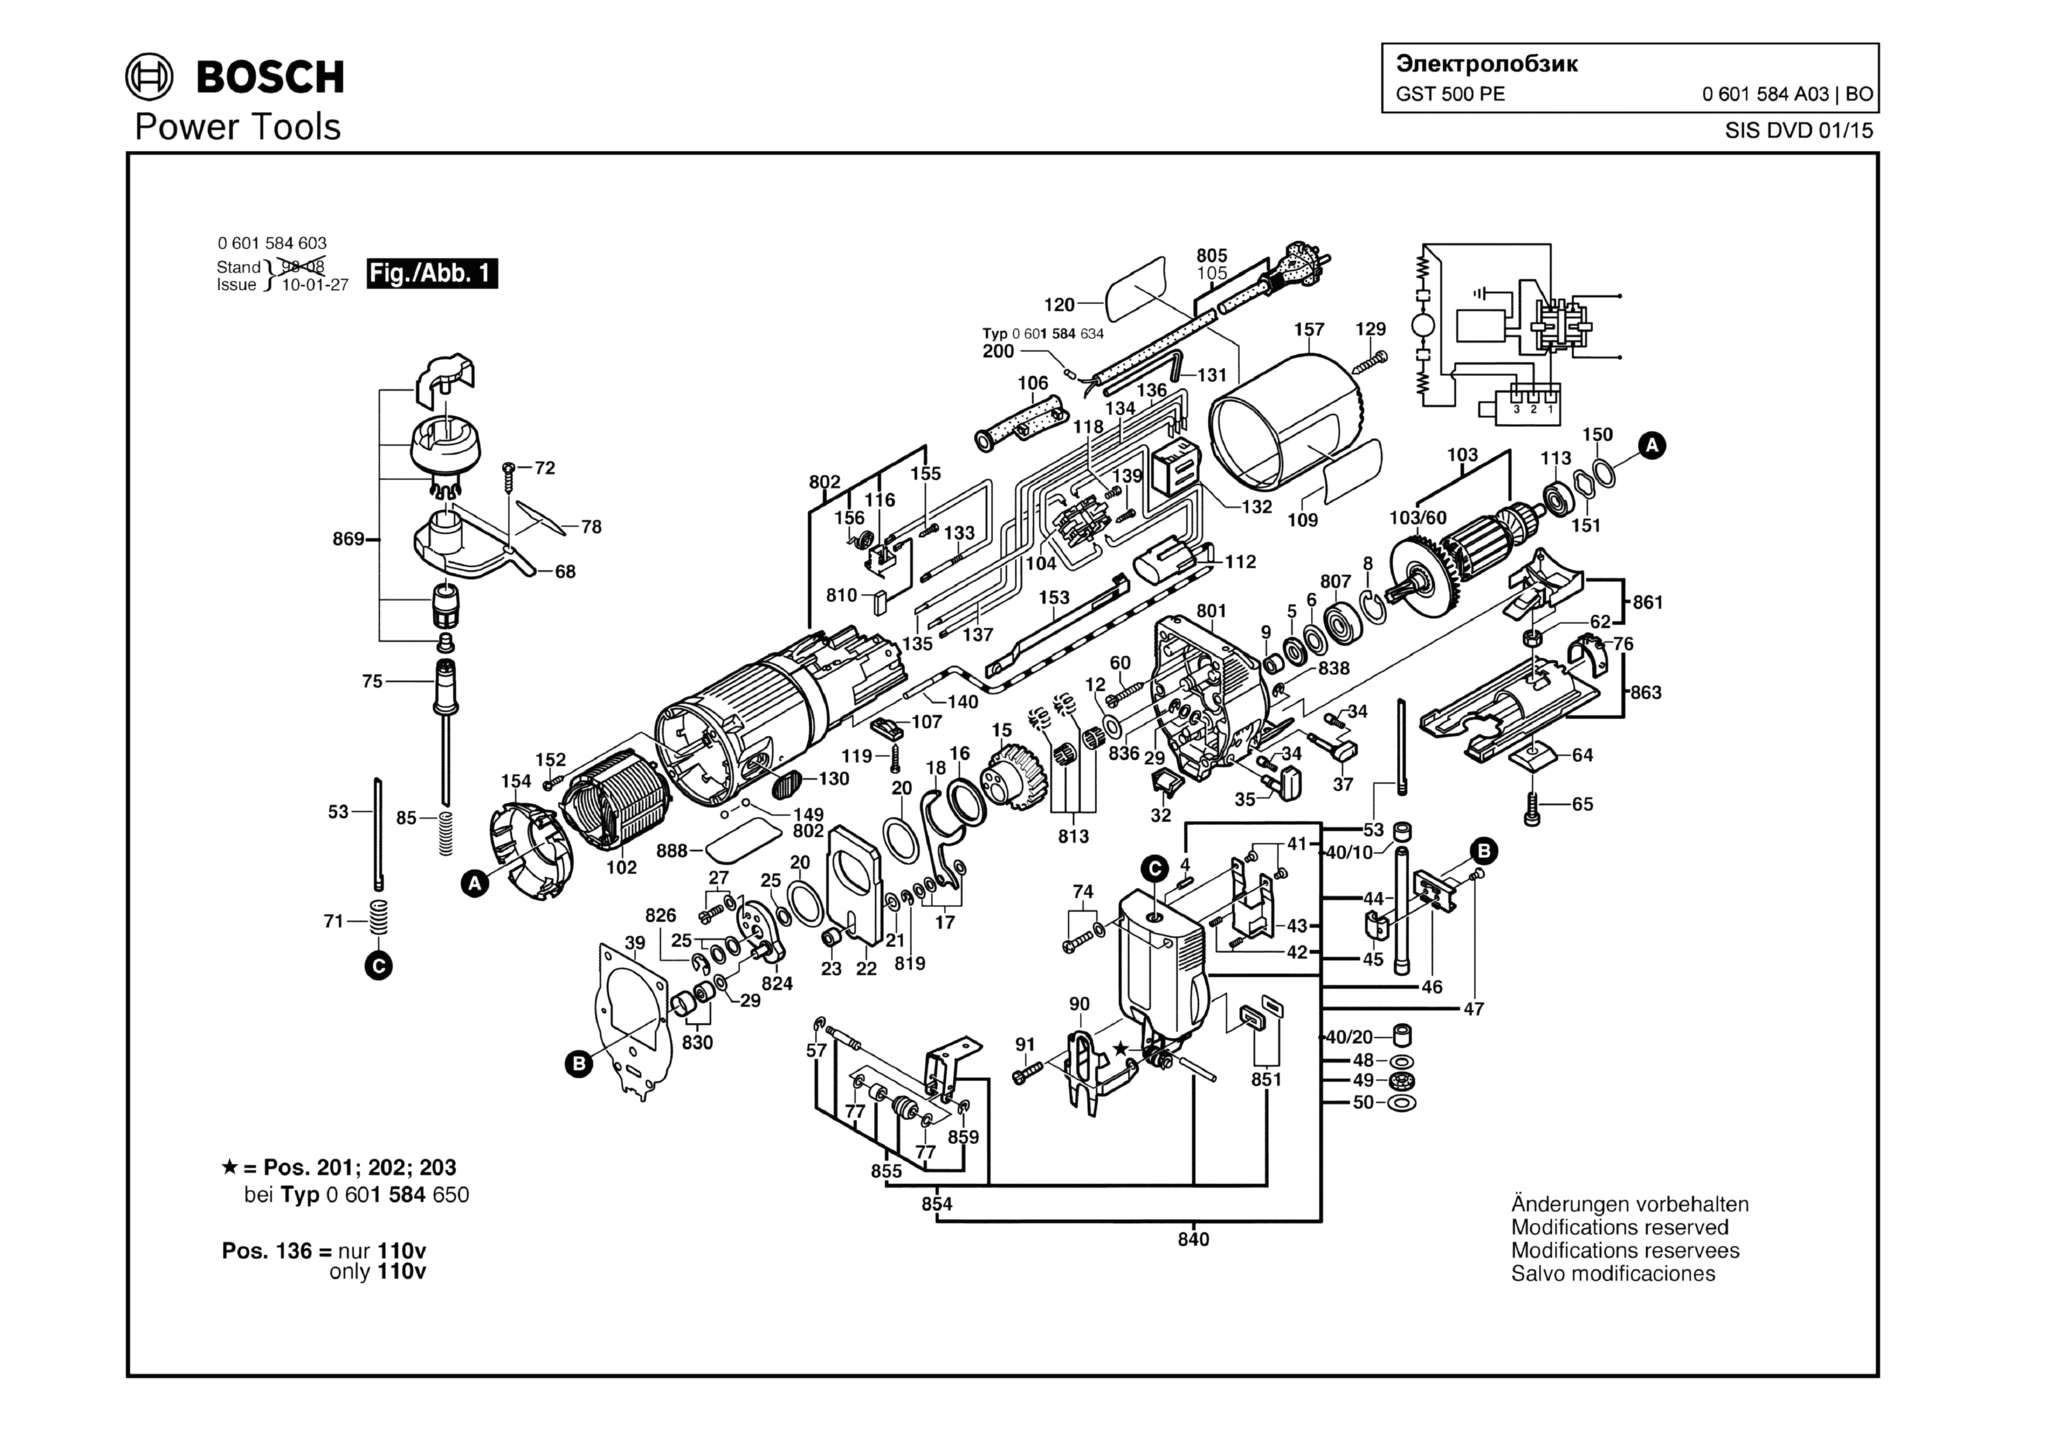 Запчасти, схема и деталировка Bosch GST 500 PE (ТИП 0601584A03)